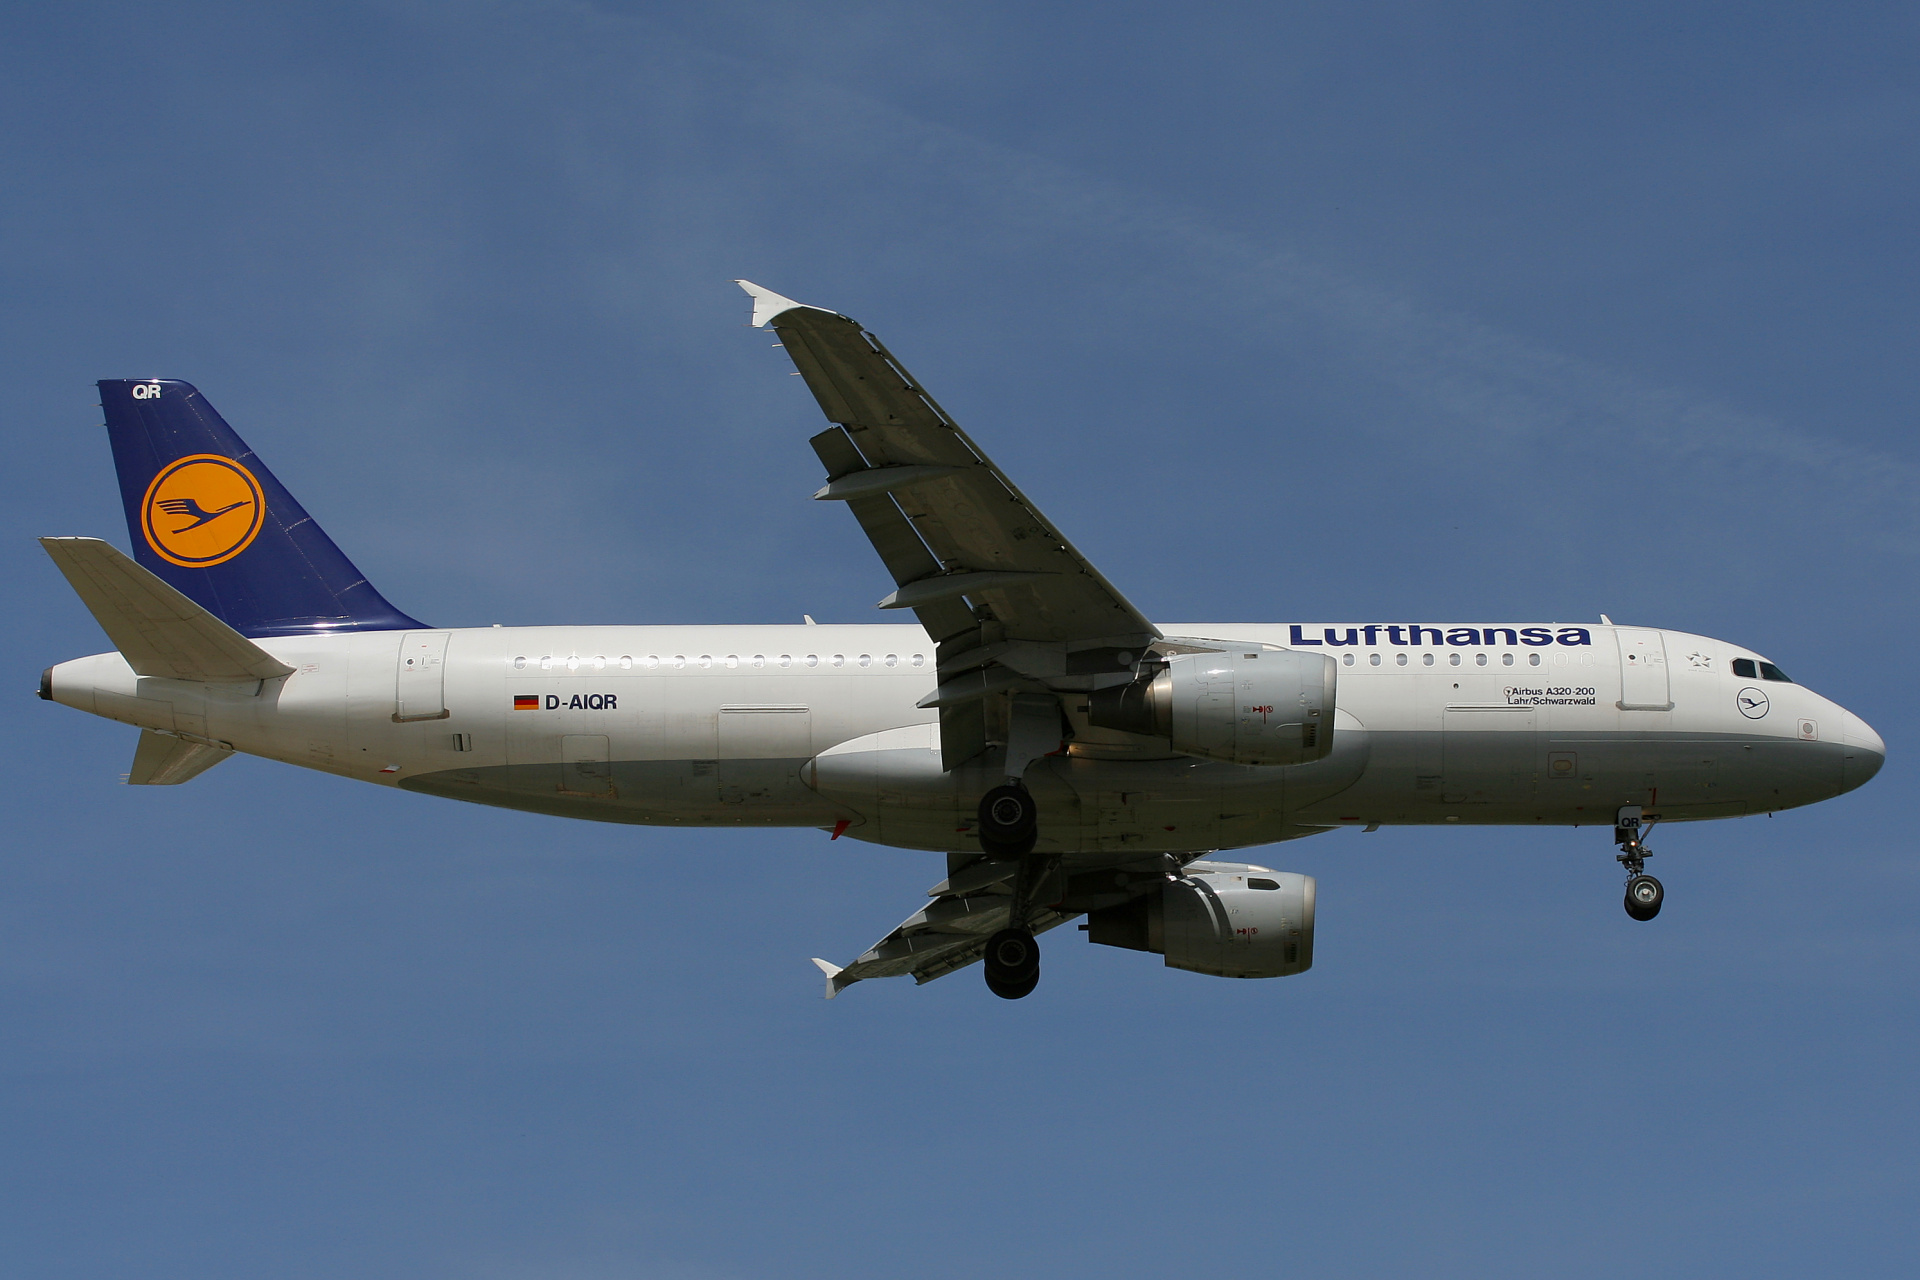 D-AIQR (Aircraft » EPWA Spotting » Airbus A320-200 » Lufthansa)